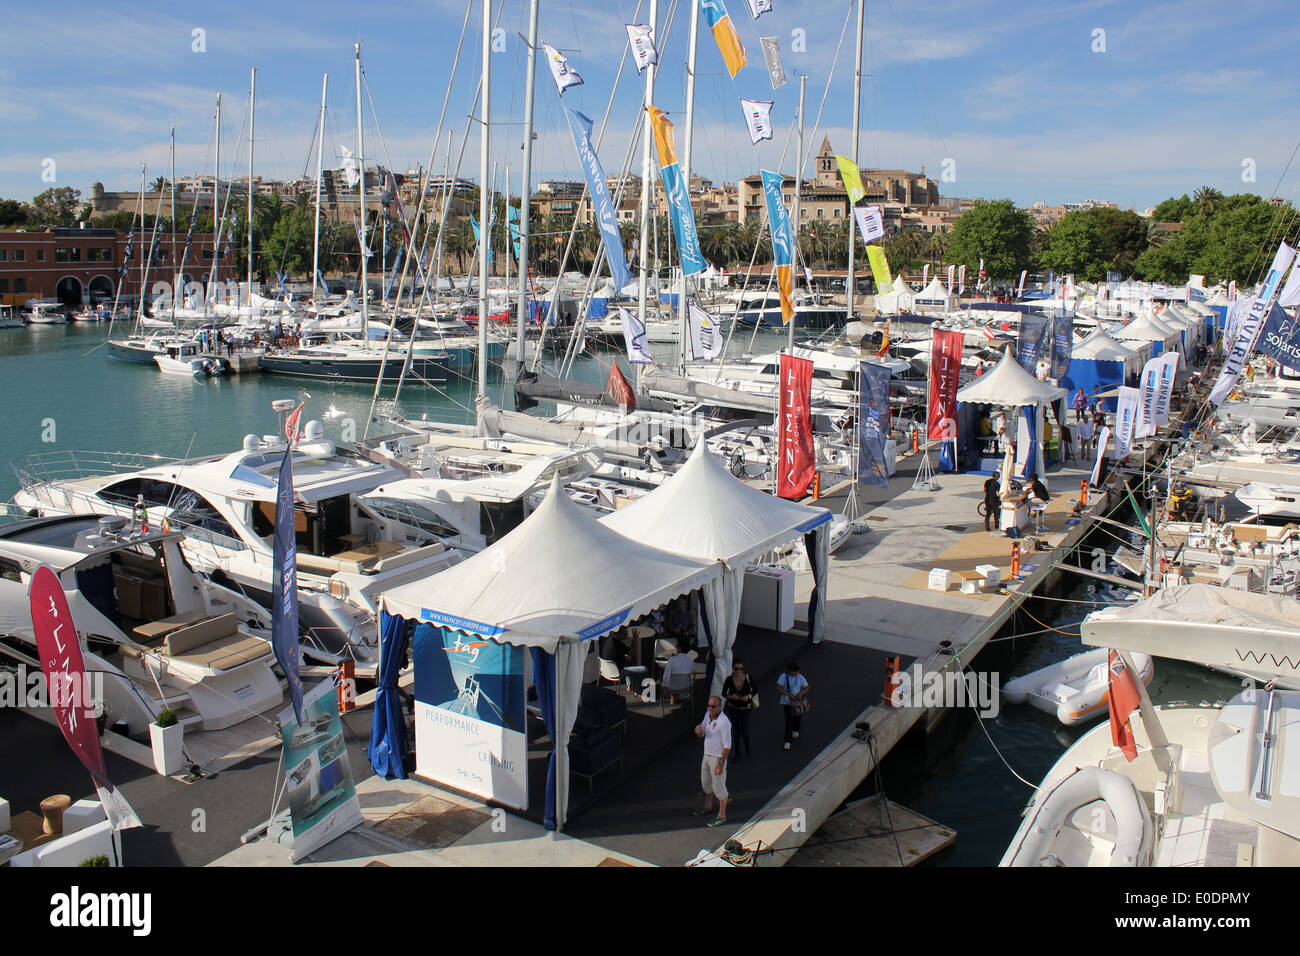 Combined - Palma Boat Show 2014 / Palma Superyacht Show 2014 - panorama - Palma de Mallorca / Majorca, Balearic Islands, Spain. Stock Photo